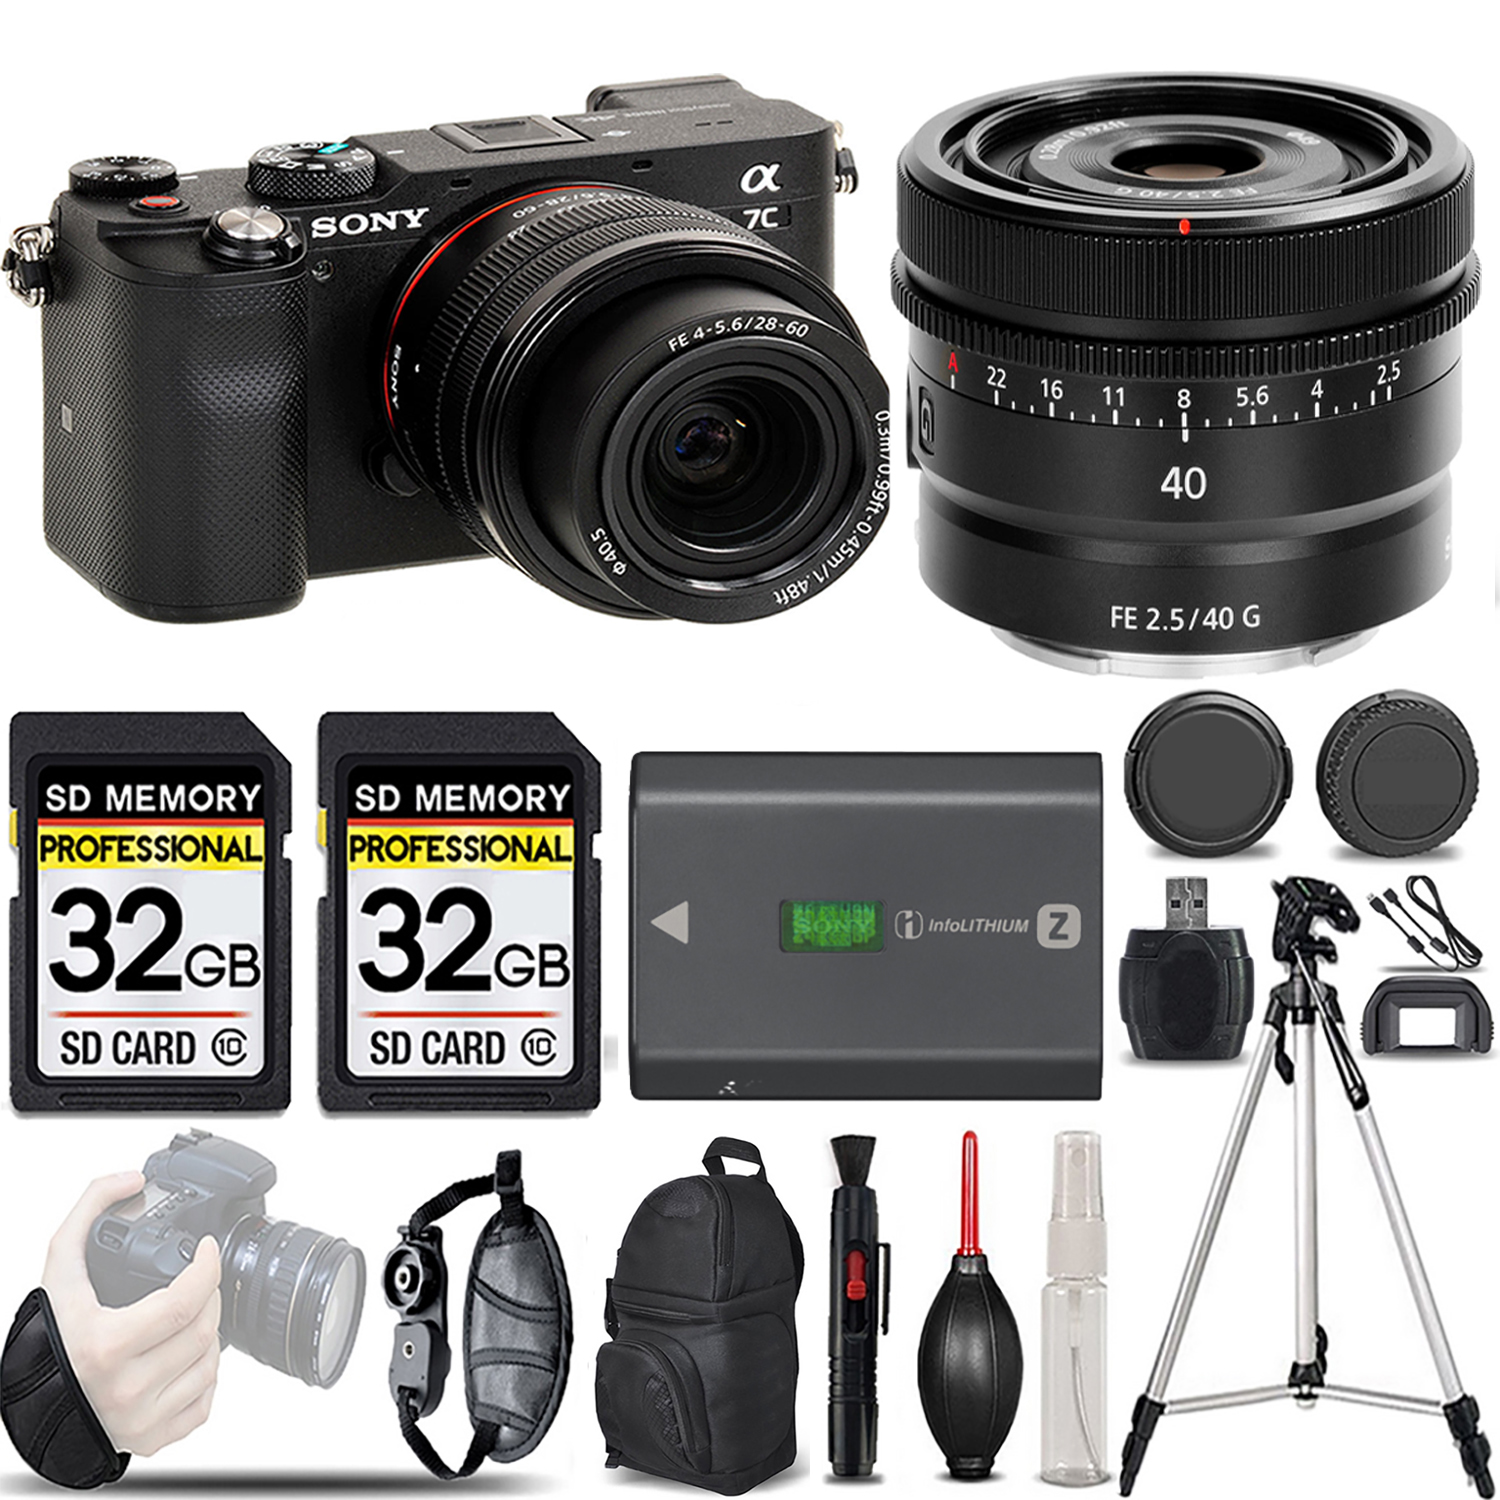 Alpha a7C Mirrorless Camera (Black) + 28-60mm Lens + 40mm f/2.5 G Lens - LOADED KIT *FREE SHIPPING*